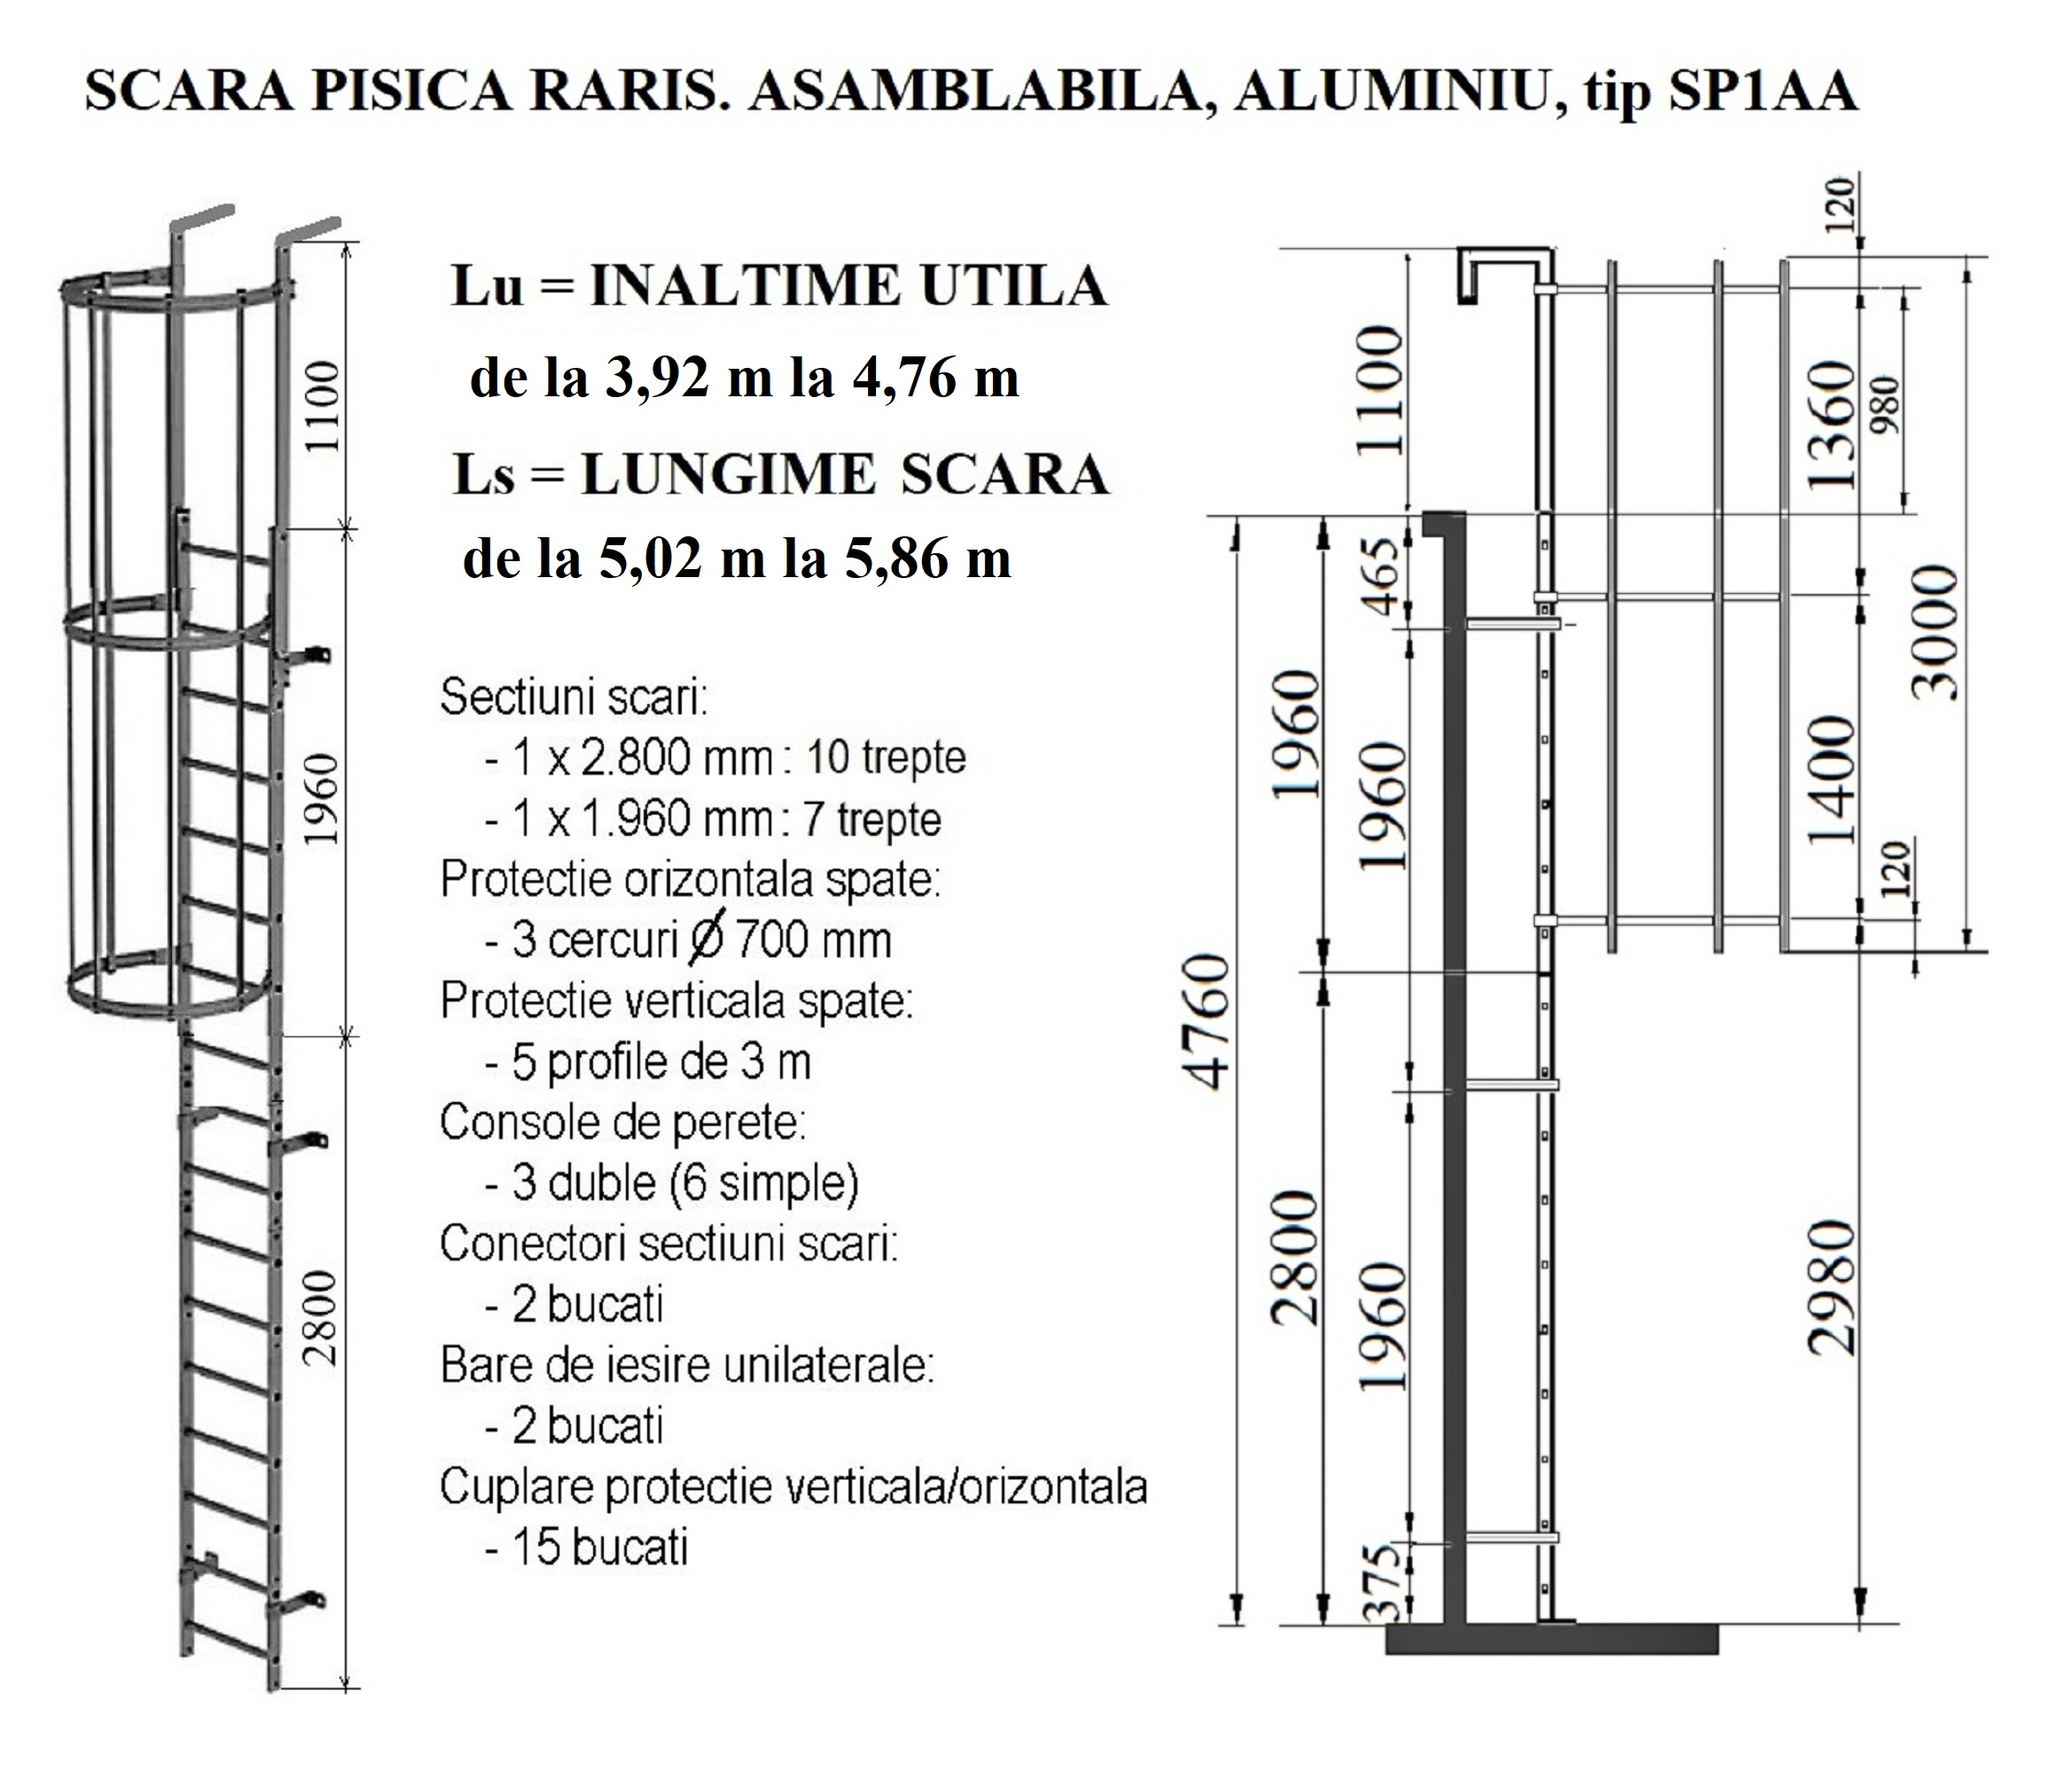 Scara pisica RARIS, asamblabila, din aluminiu, inaltime acoperis de la 3,92 m la 4,76 m, cod SP1AA